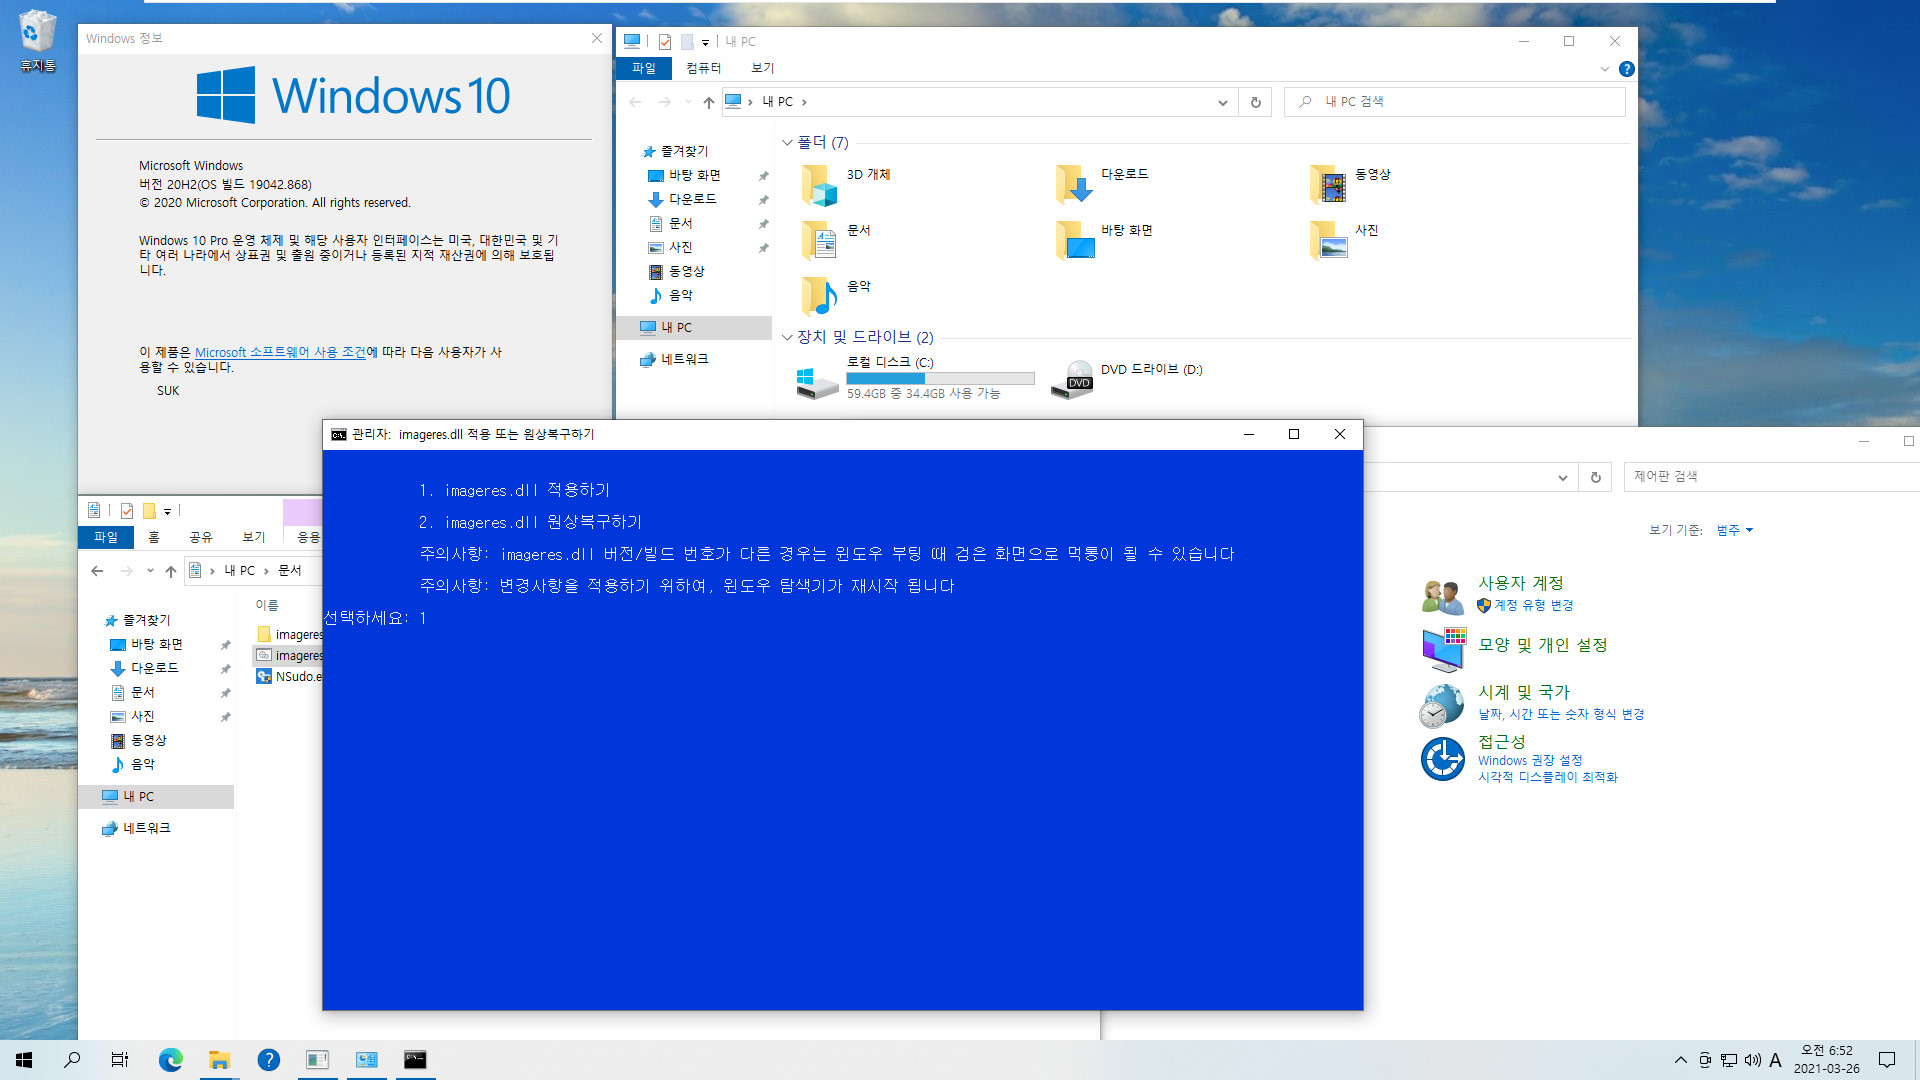 imageres.dll적용하기3 - nsudo.bat 테스트 - Windows 10 인사이더 프리뷰, 버전 21H2 추정, 빌드 21343.1000, PRO x64의 아이콘 적용하기 - 버전 21H1, 버전 20H2와 버전 2004까지 32비트 윈도우도 적용됩니다 2021-03-26_065233.jpg